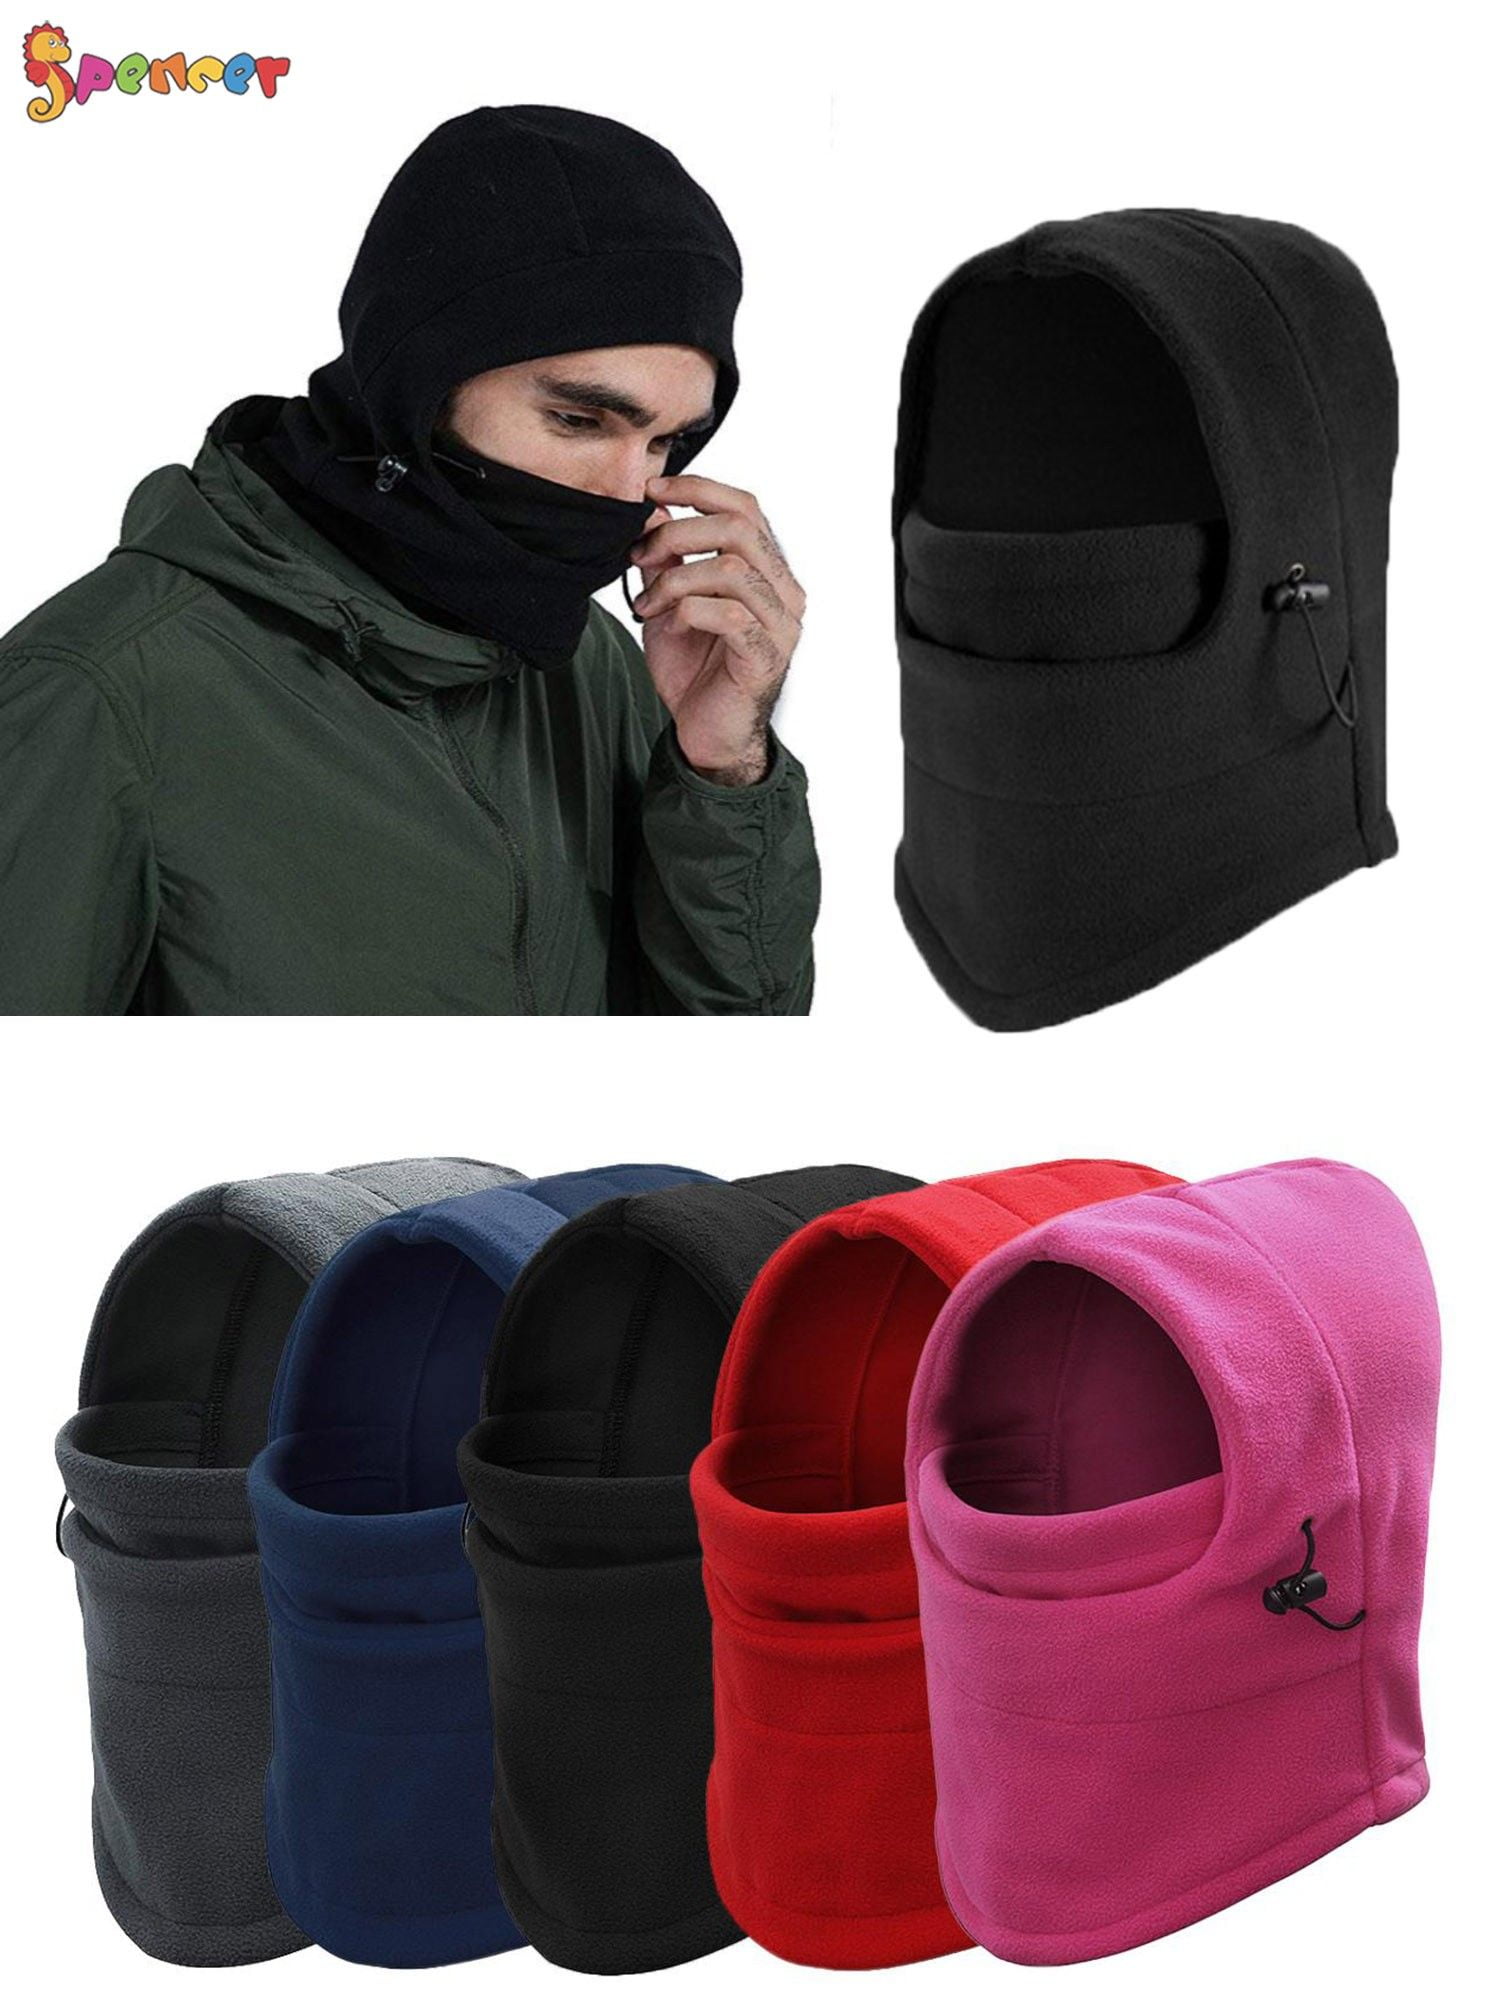 New Fleece Winter Thermal Balaclava Swat Ski Motorcycle Bike Face Mask Hood Hat 